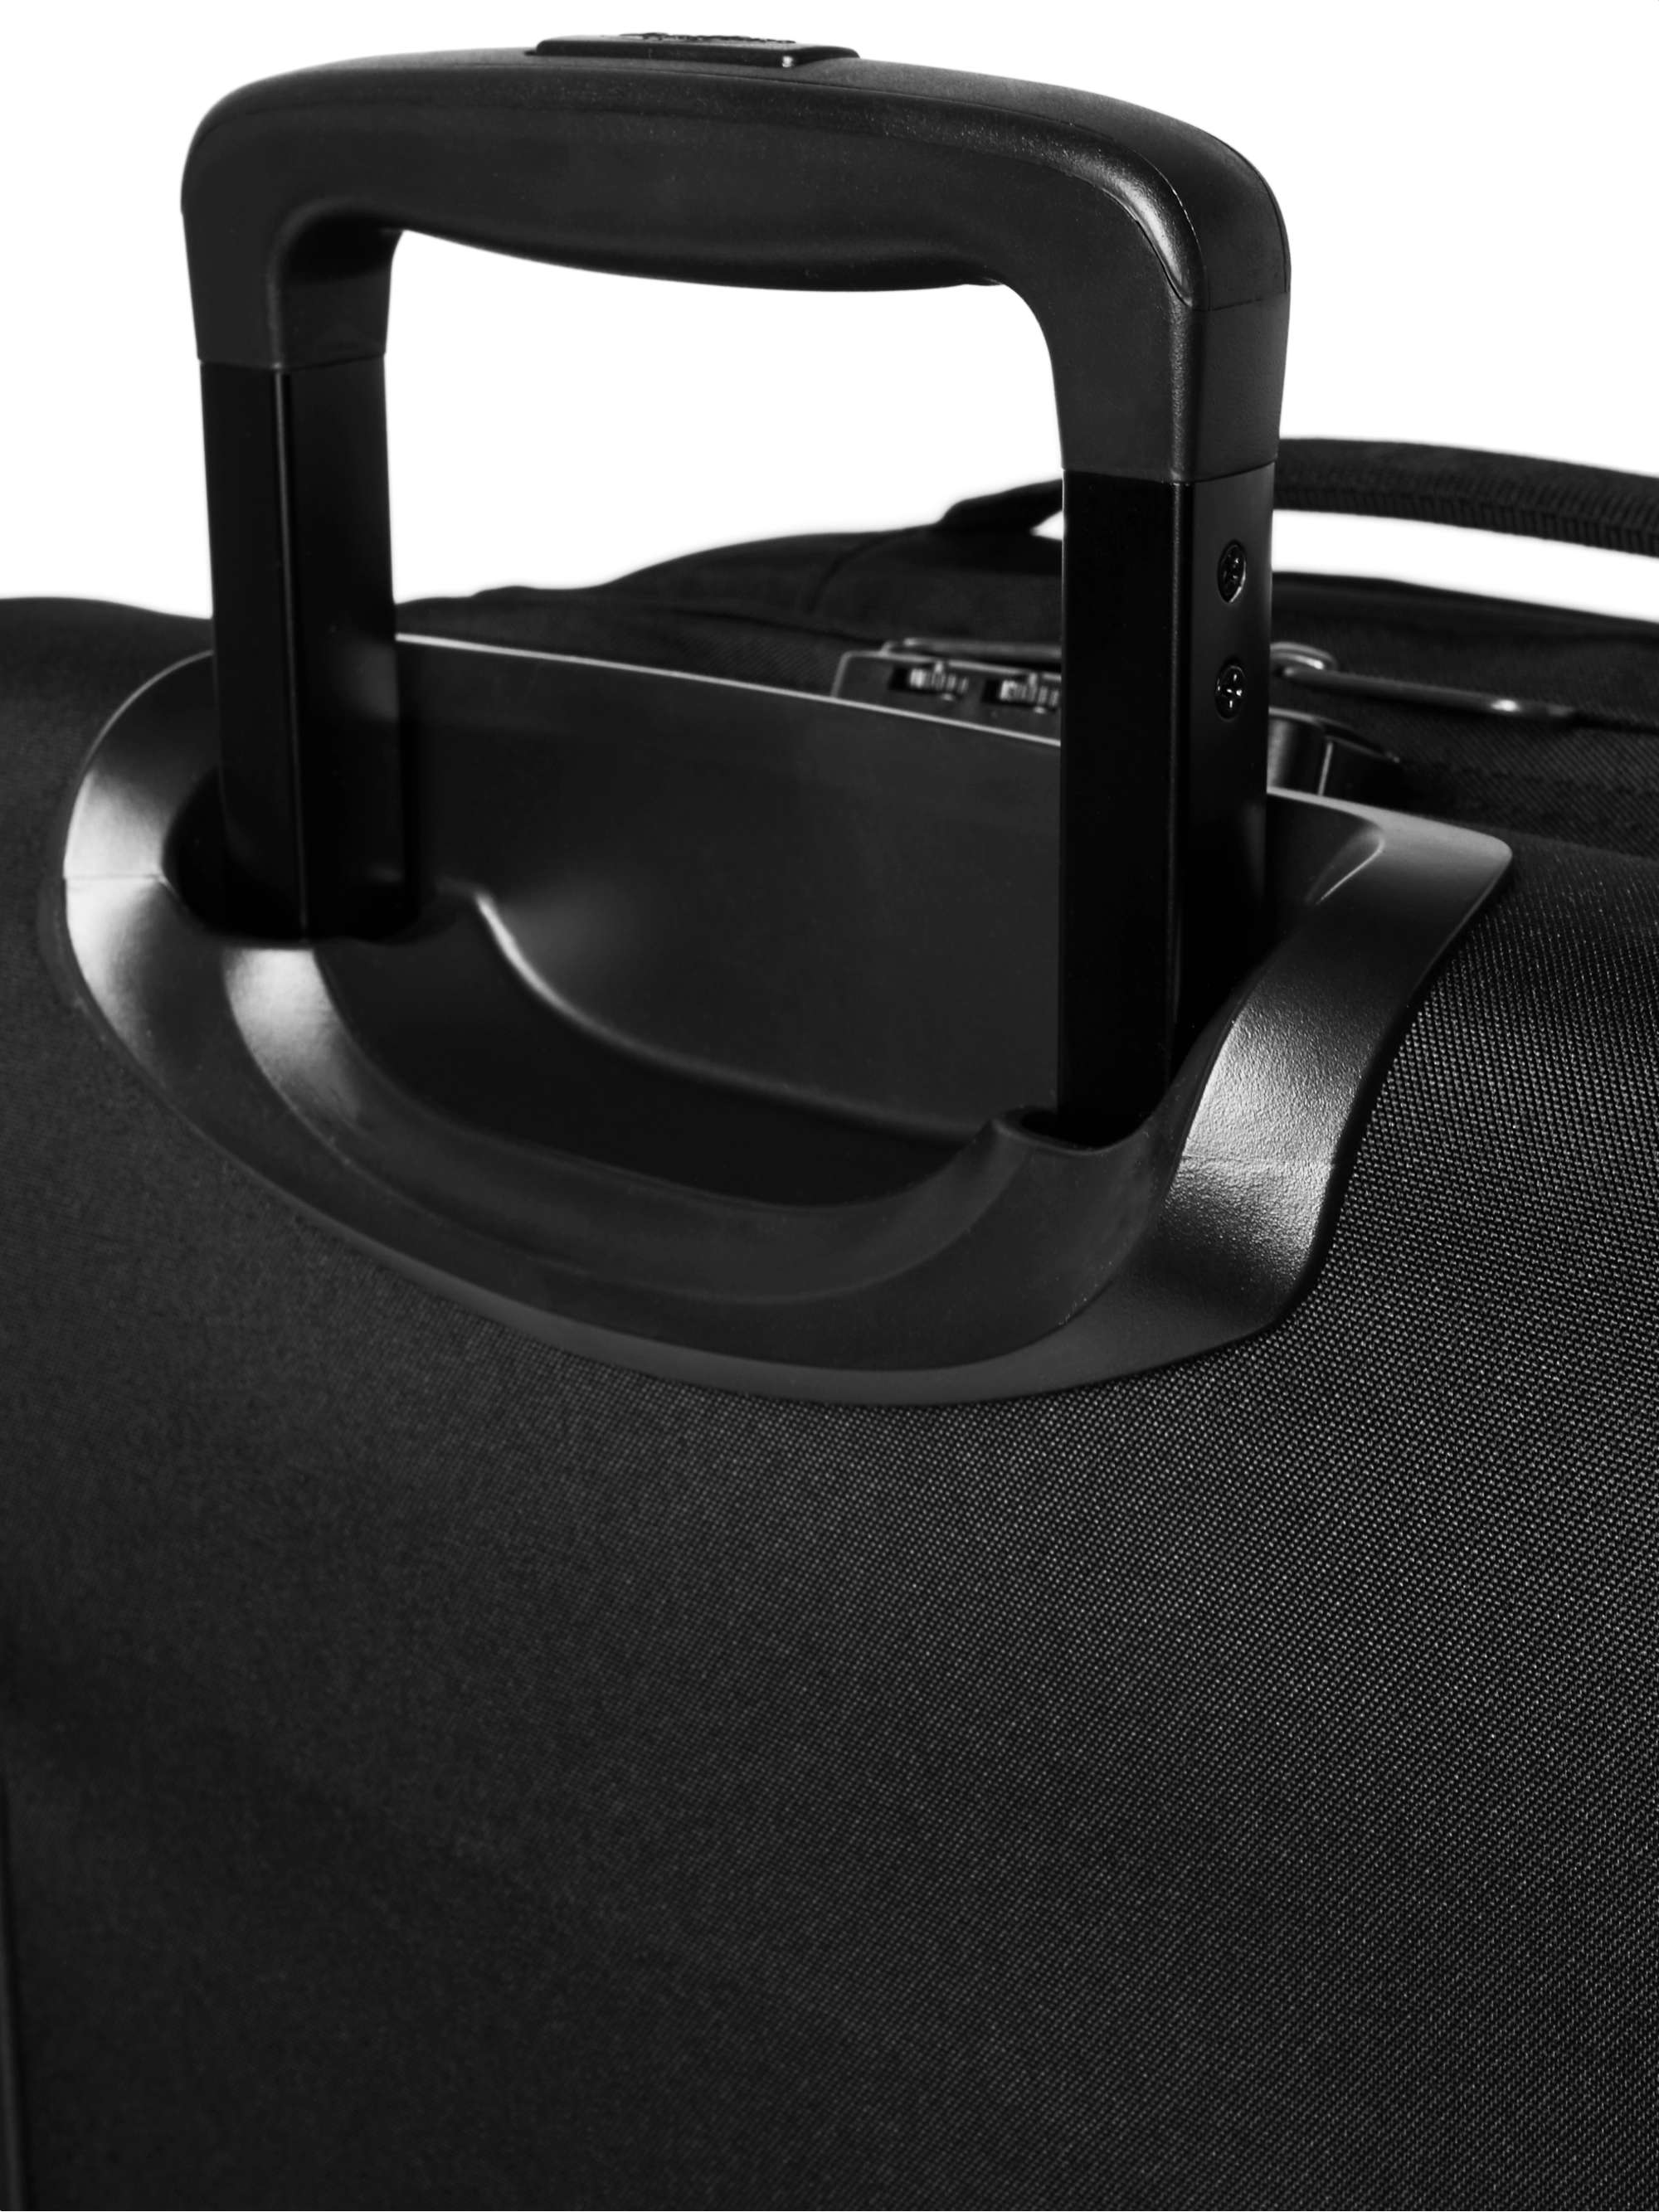 EASTPAK Tranverz M Canvas Suitcase | MR PORTER